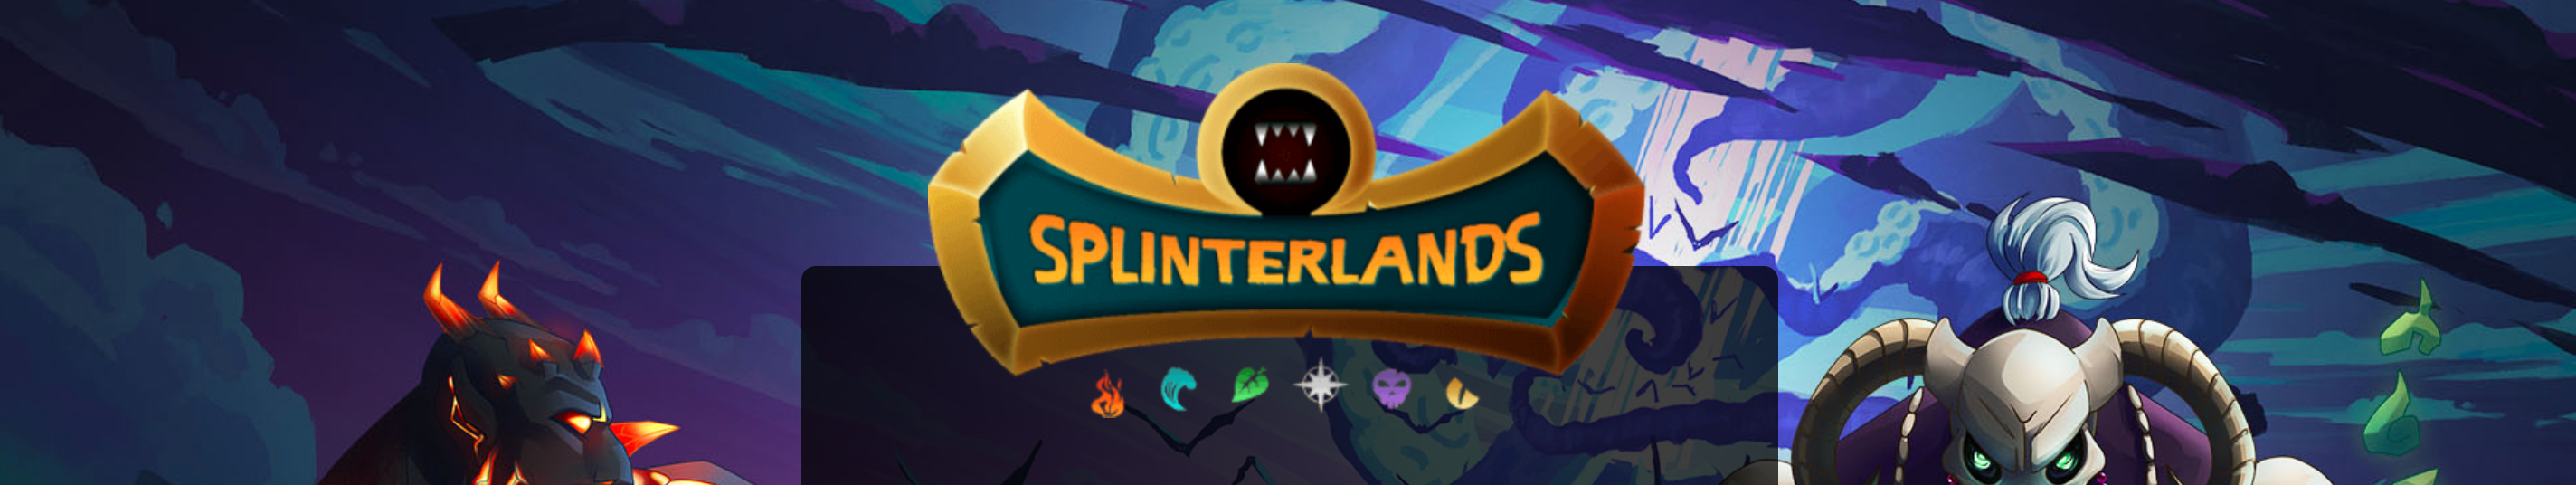 Splinterlands play to earn game banner.